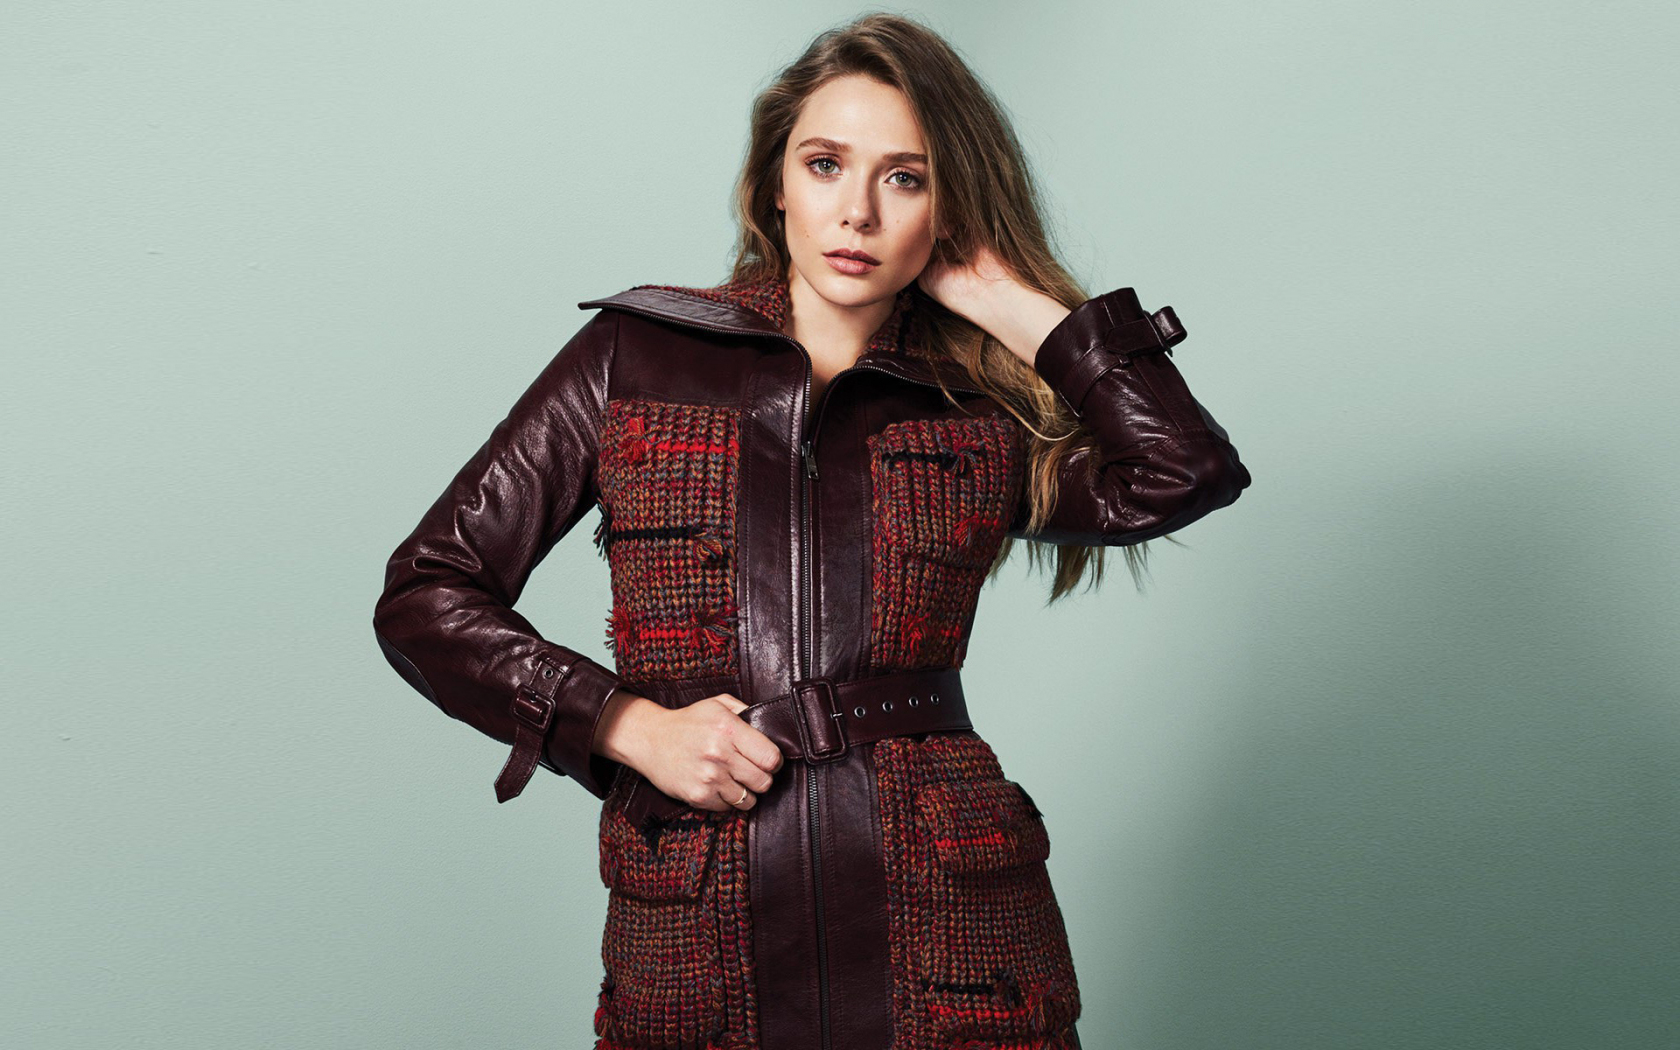 Download 1680x1050 Wallpaper Leather Coat Elizabeth Olsen Images, Photos, Reviews